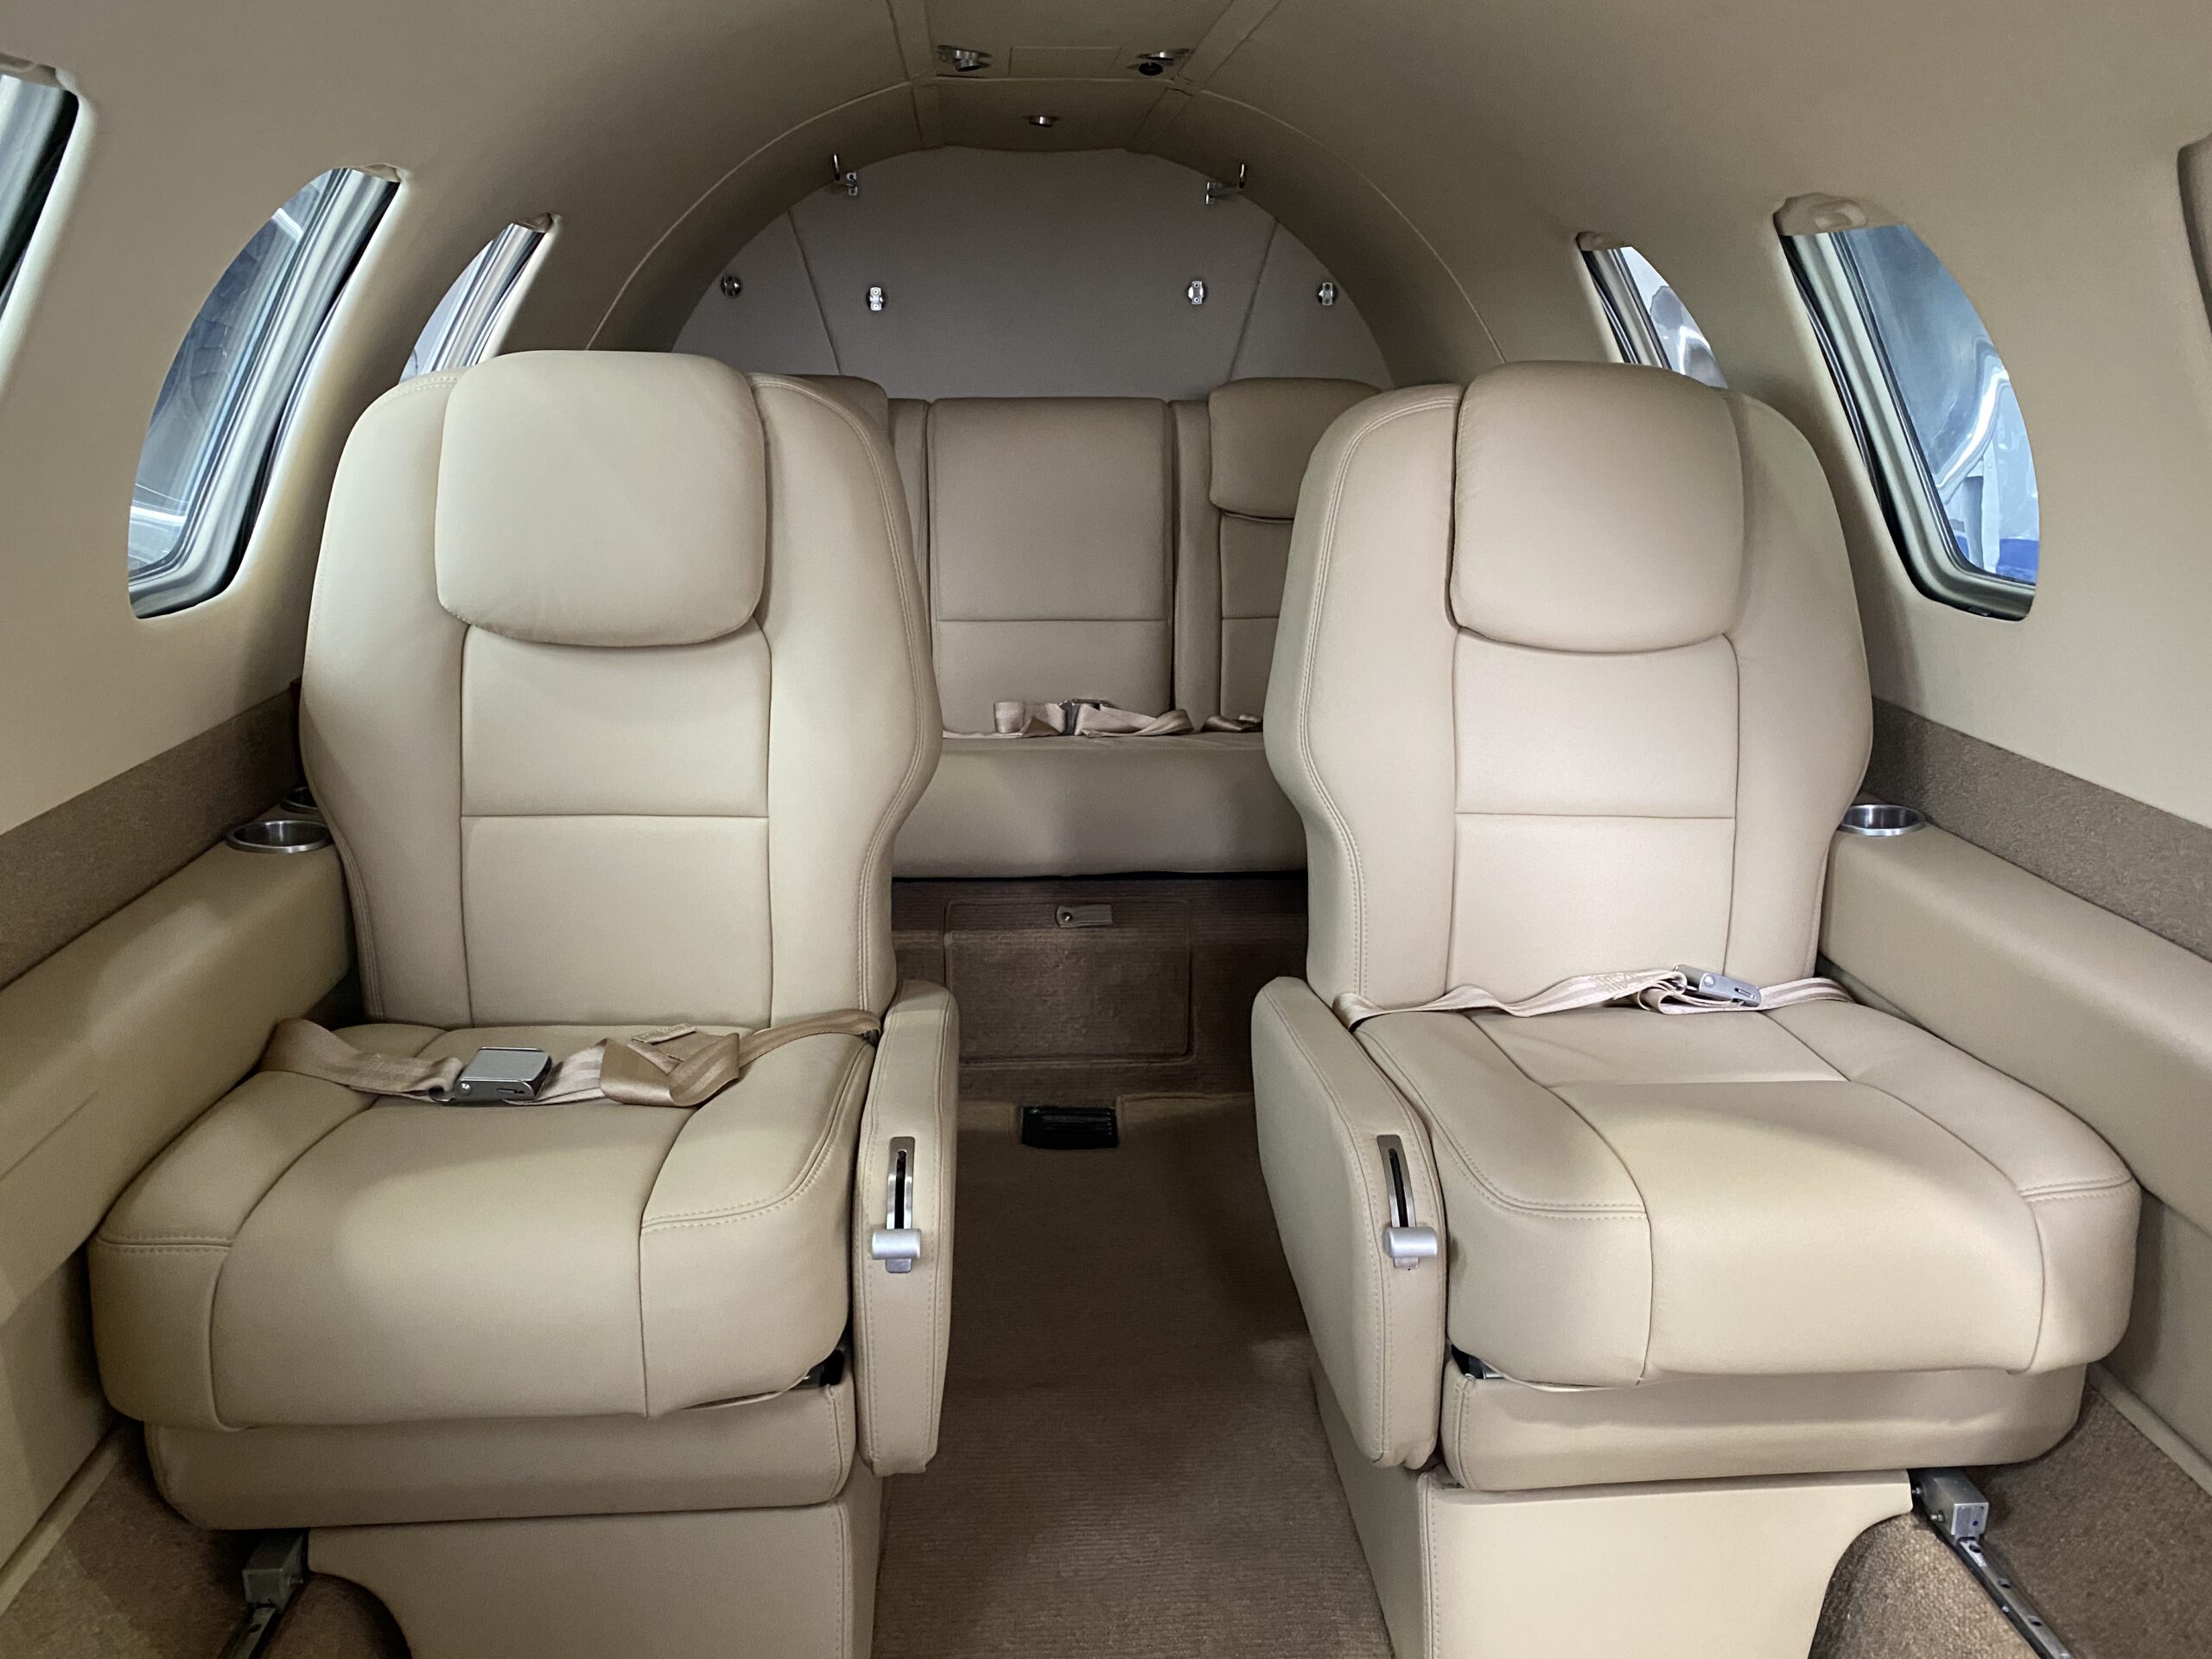 Citation interior, Citation 500 upholstery, Citation 501 interior, Jet seat upholstery, custom aircraft interior, Citation interior upholstery